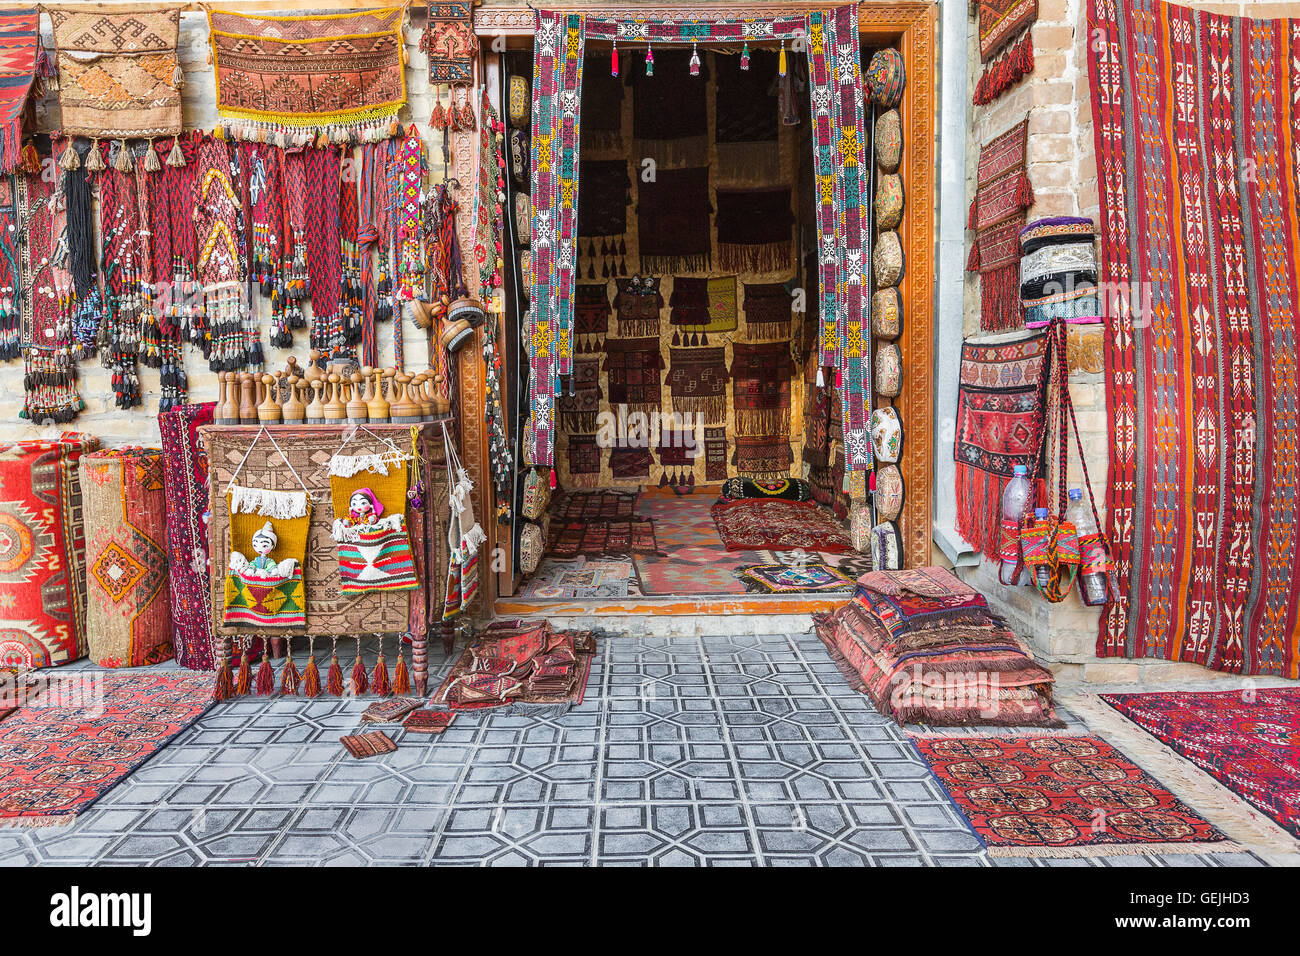 Handmade carpets and rugs. Stock Photo